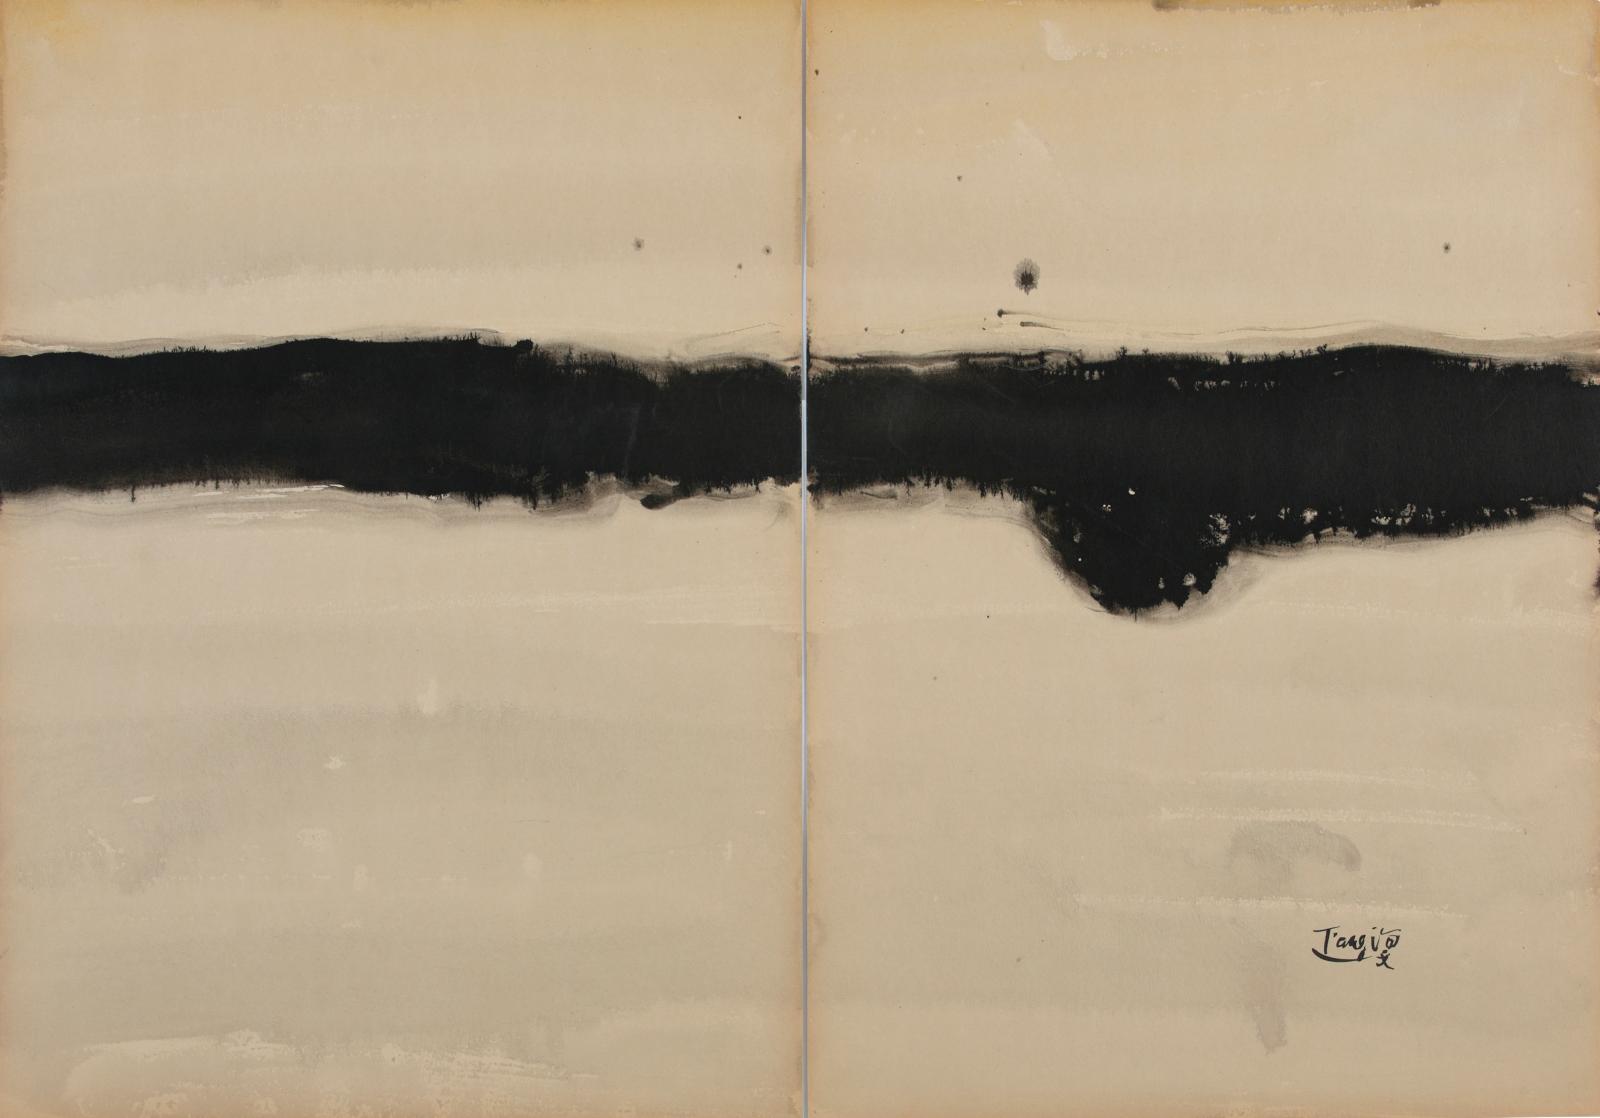 T'ang Haywen, Sans titre, 1969, encre sur carton Kyro, diptyque 70 x 100 cm. Estimation : 4 000/6 000 €